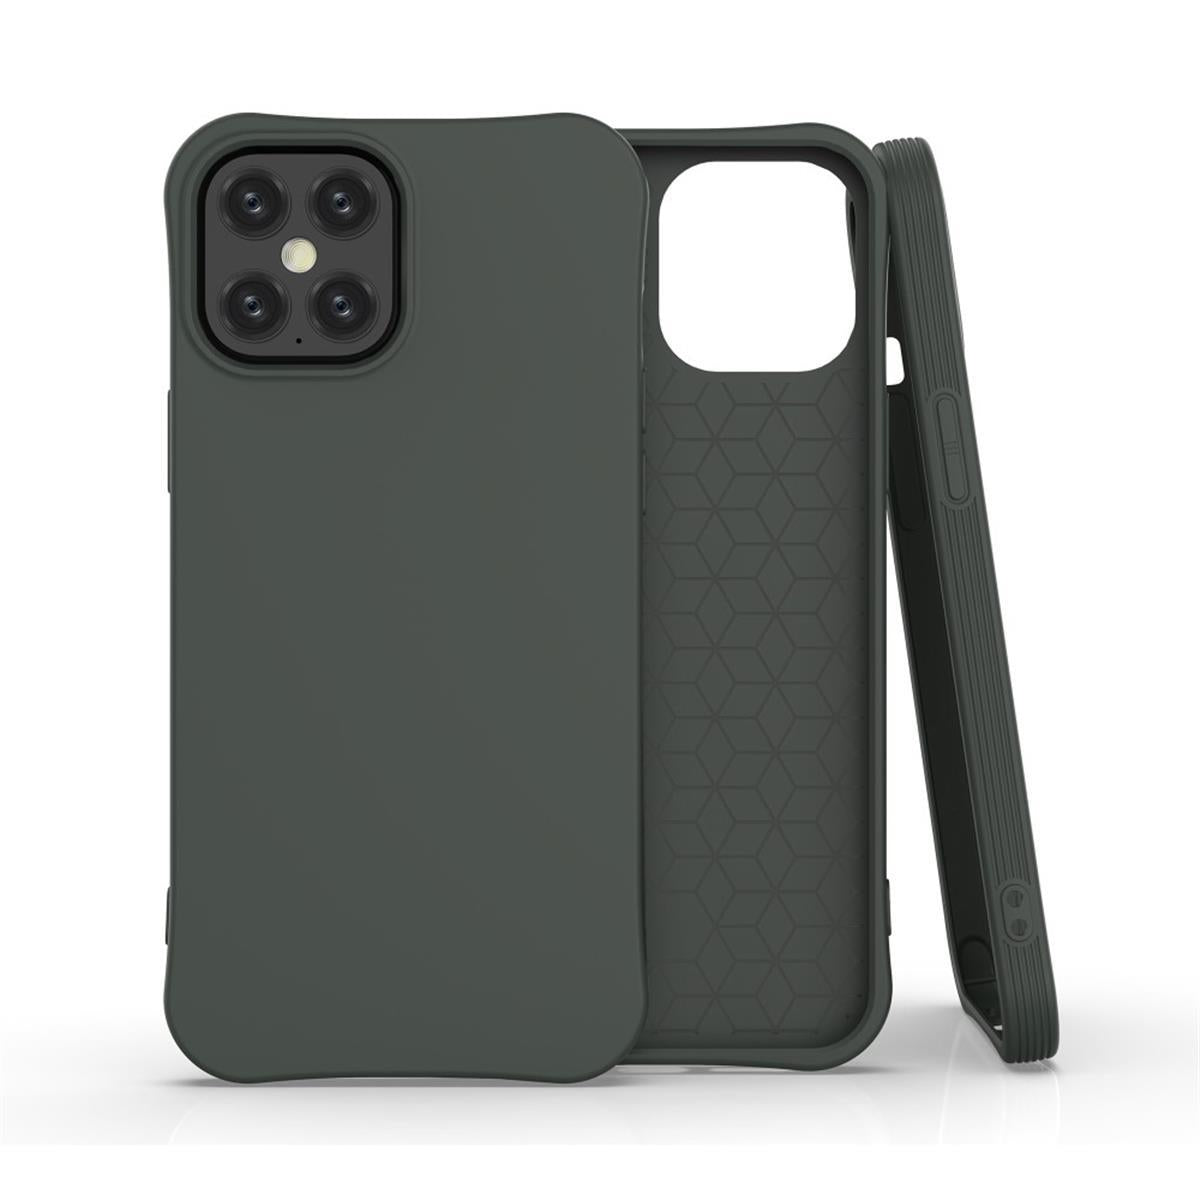 Hülle für Apple iPhone 12 Pro Max Handyhülle Silikon Case Cover Bumper Matt